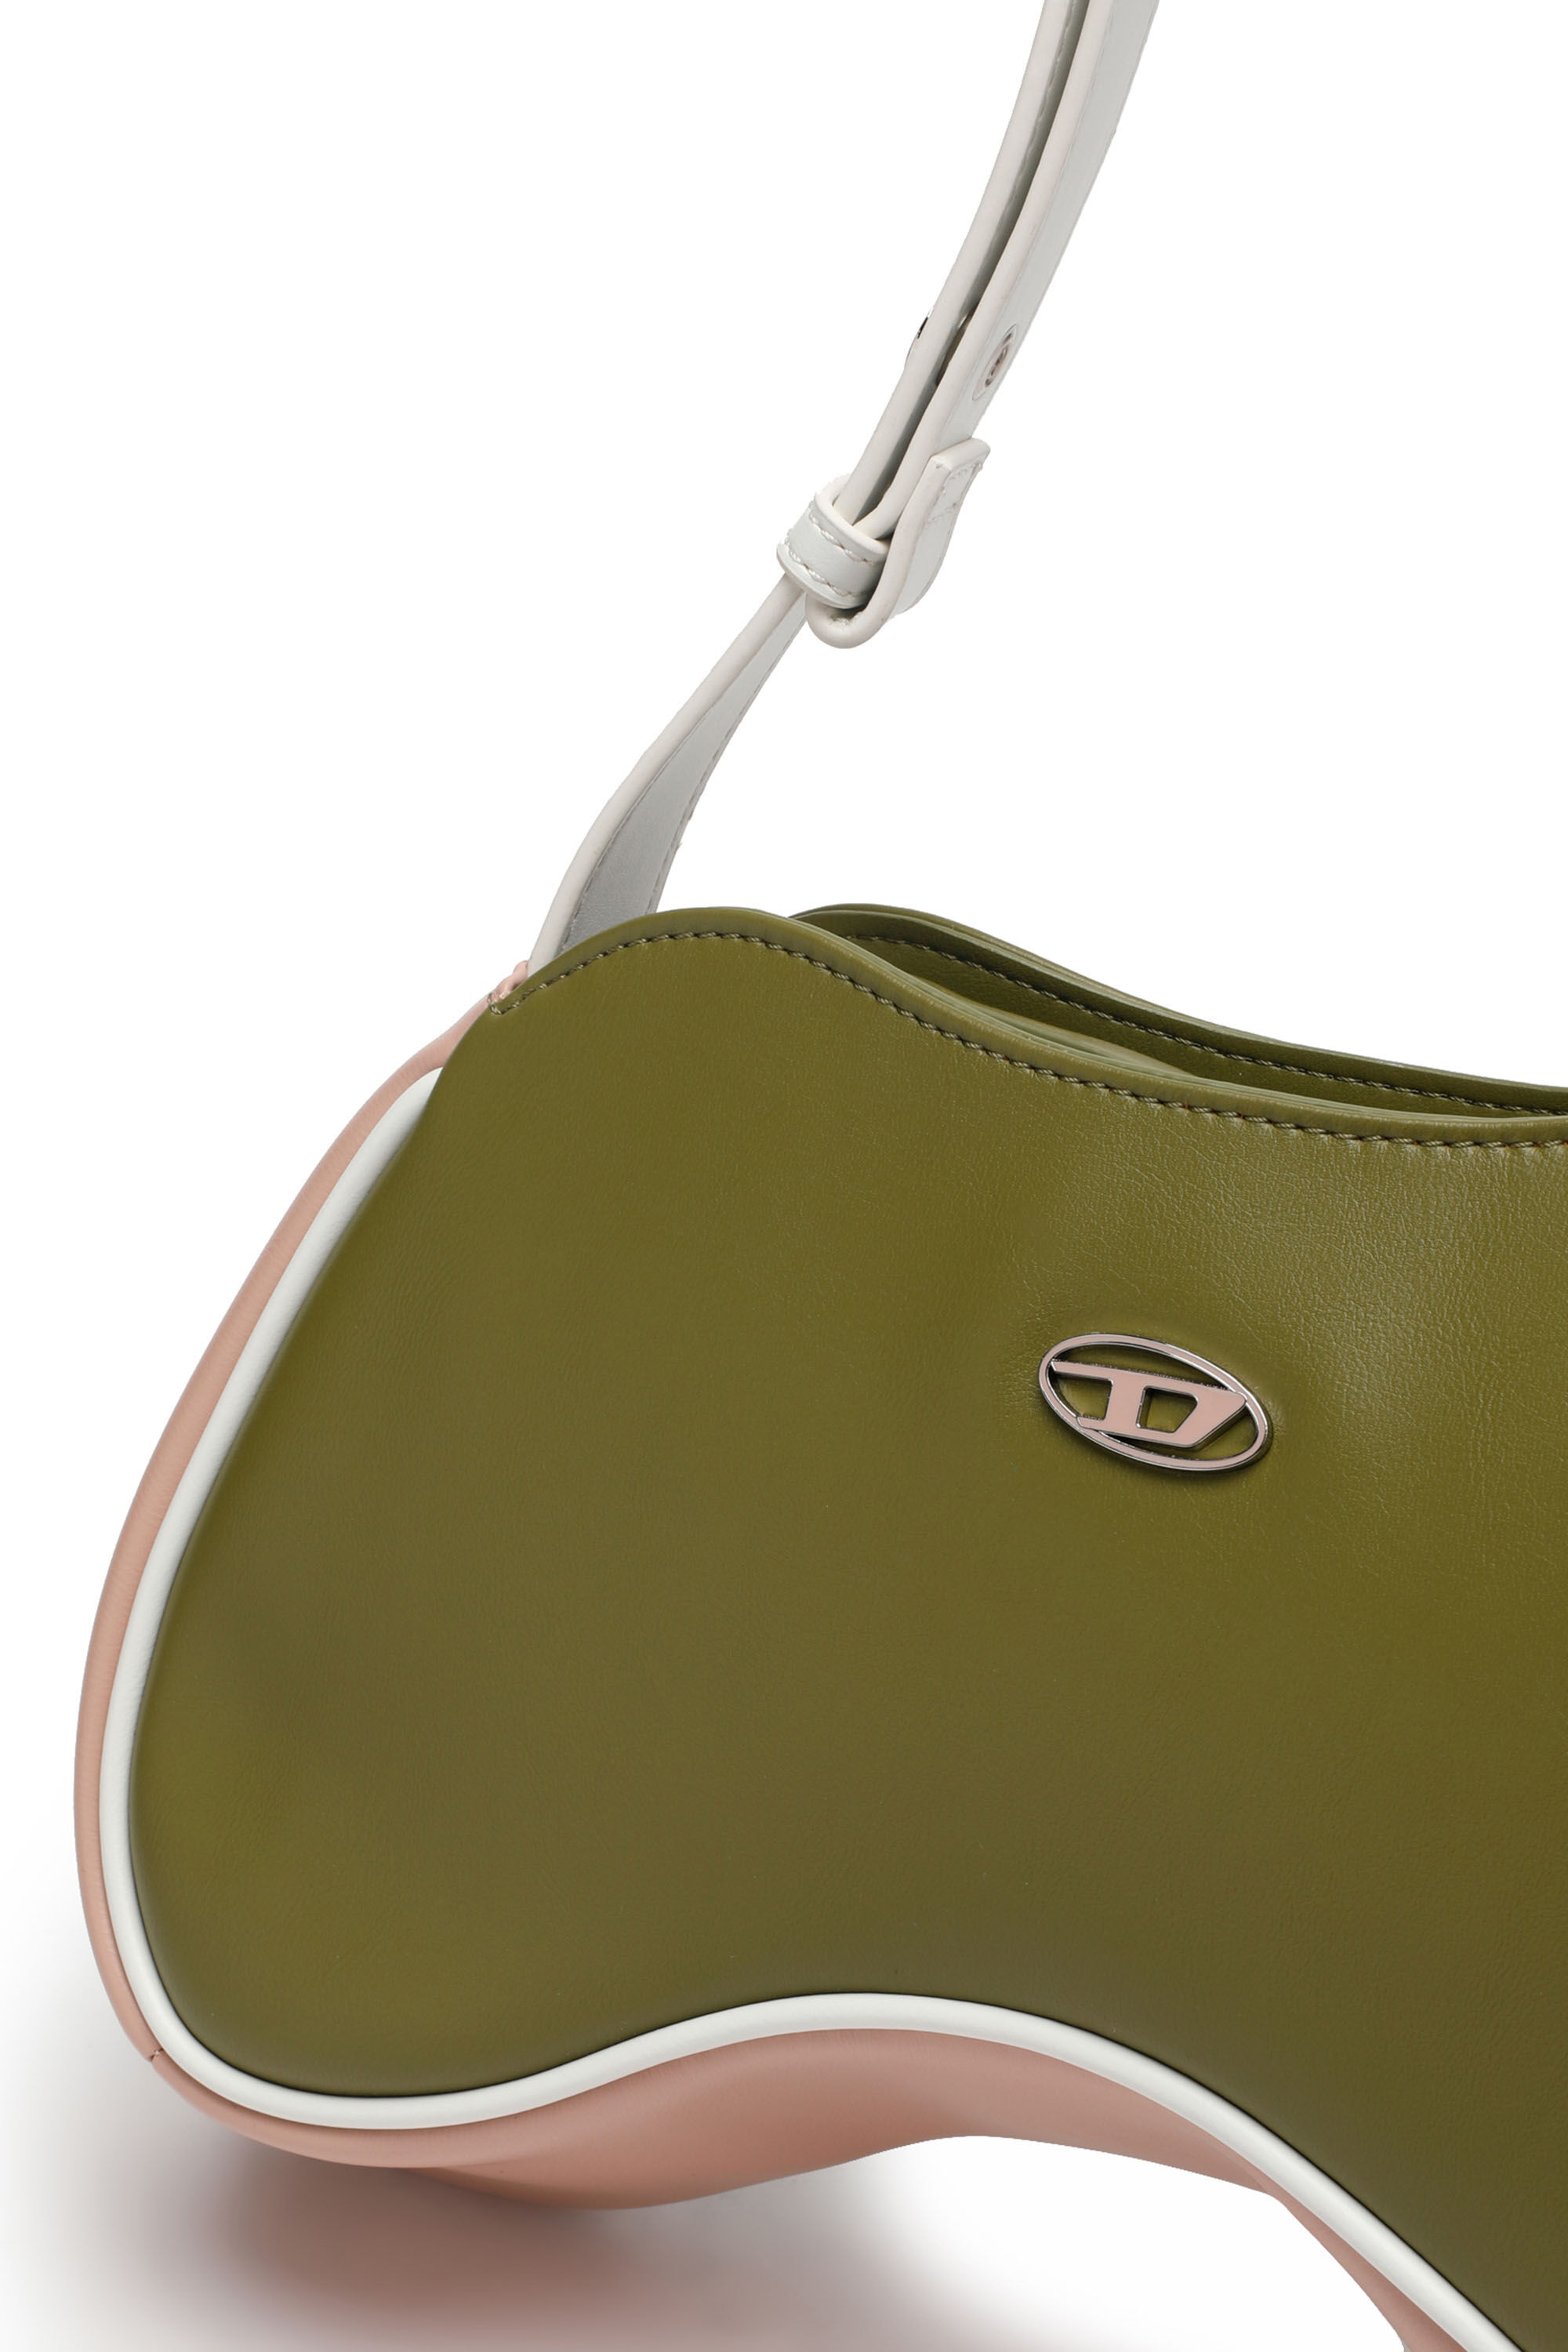 PLAY SHOULDER Woman: Shoulder bag with two-tone design | Diesel